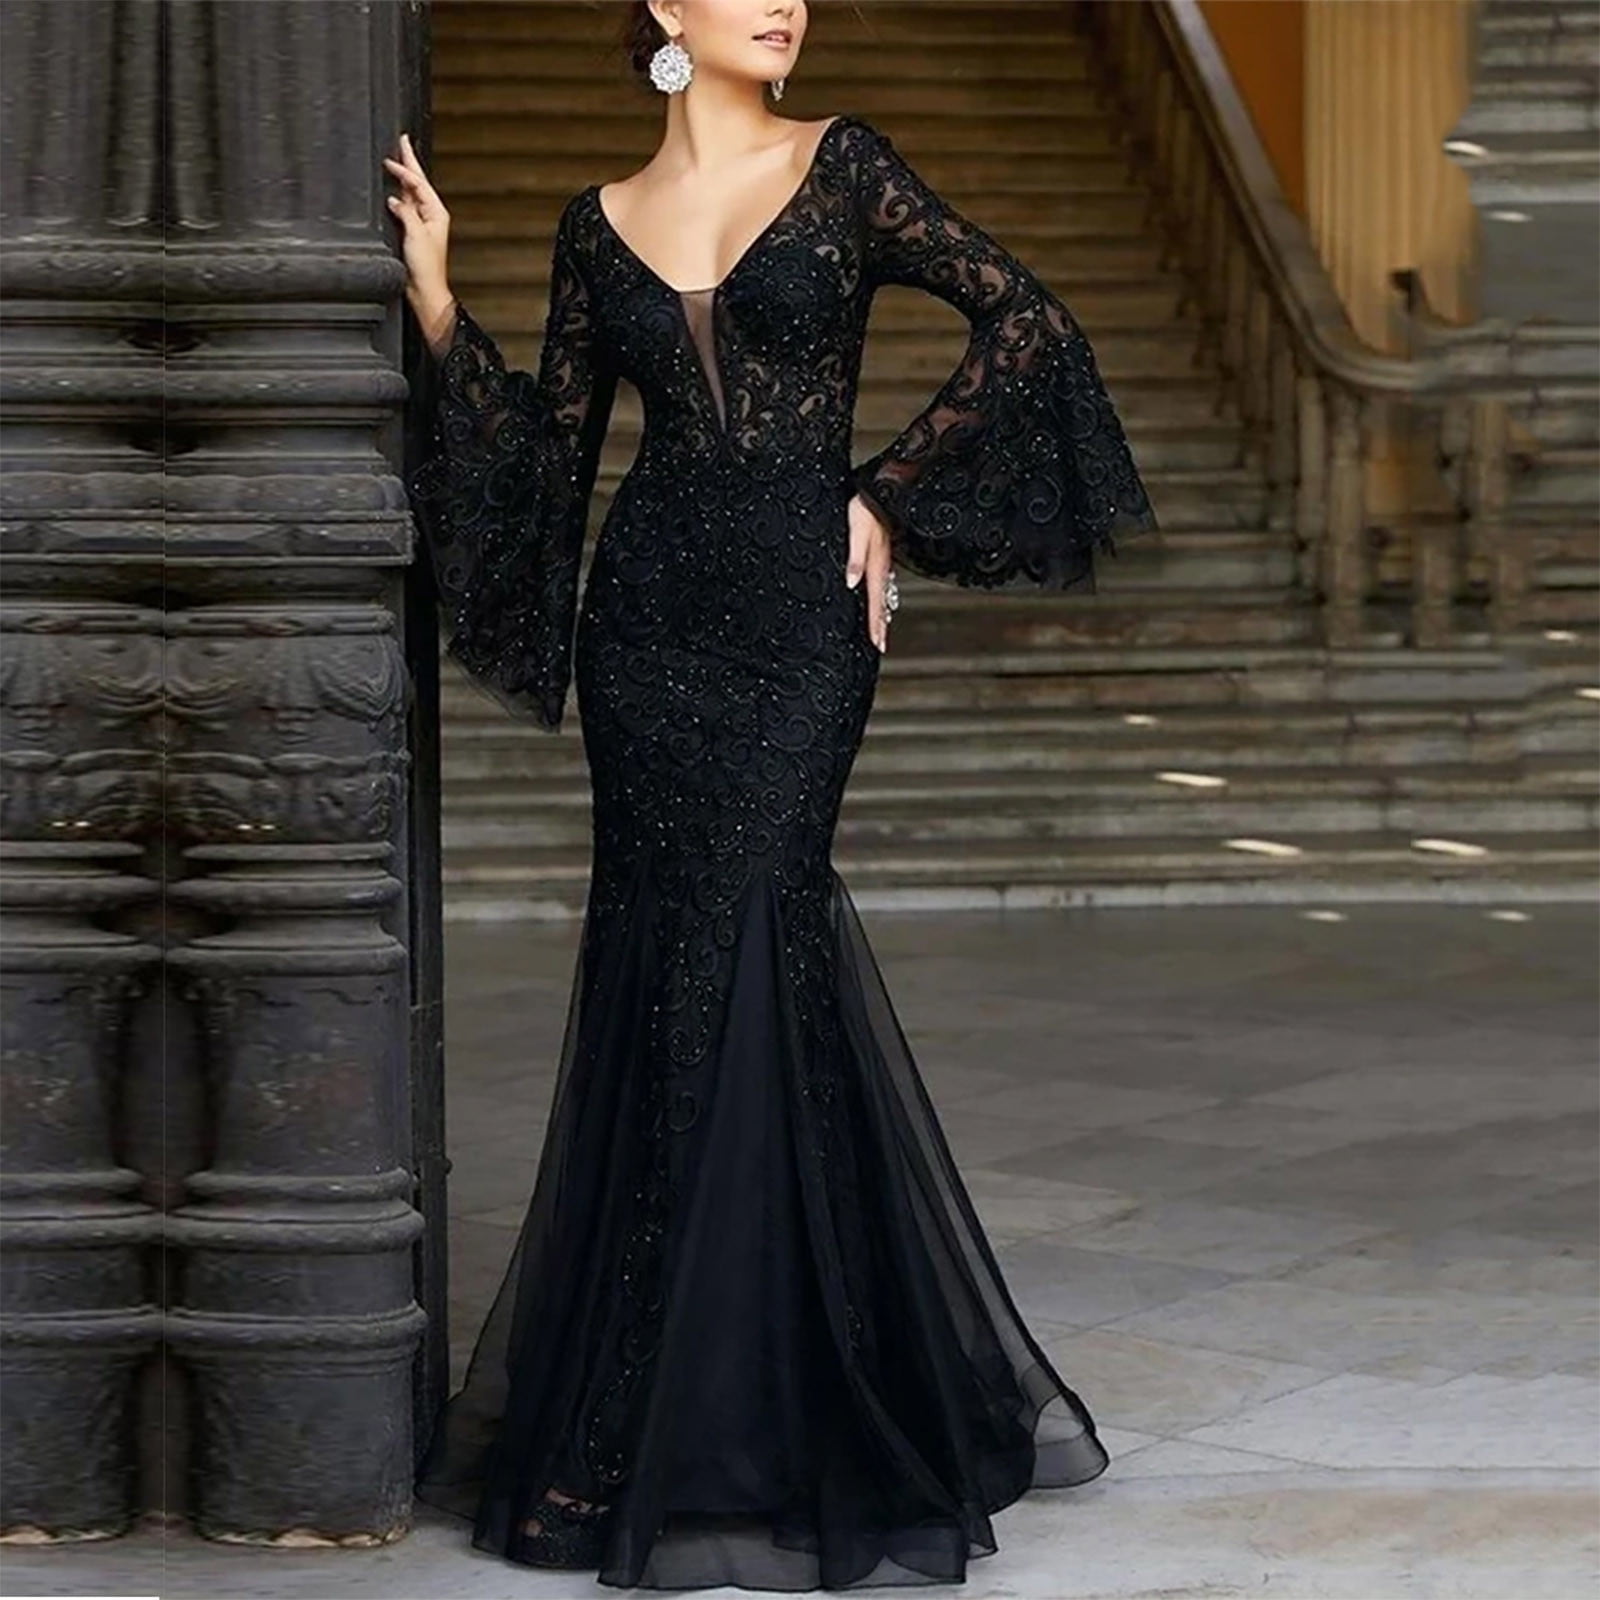 black long sleeve bridesmaid dress